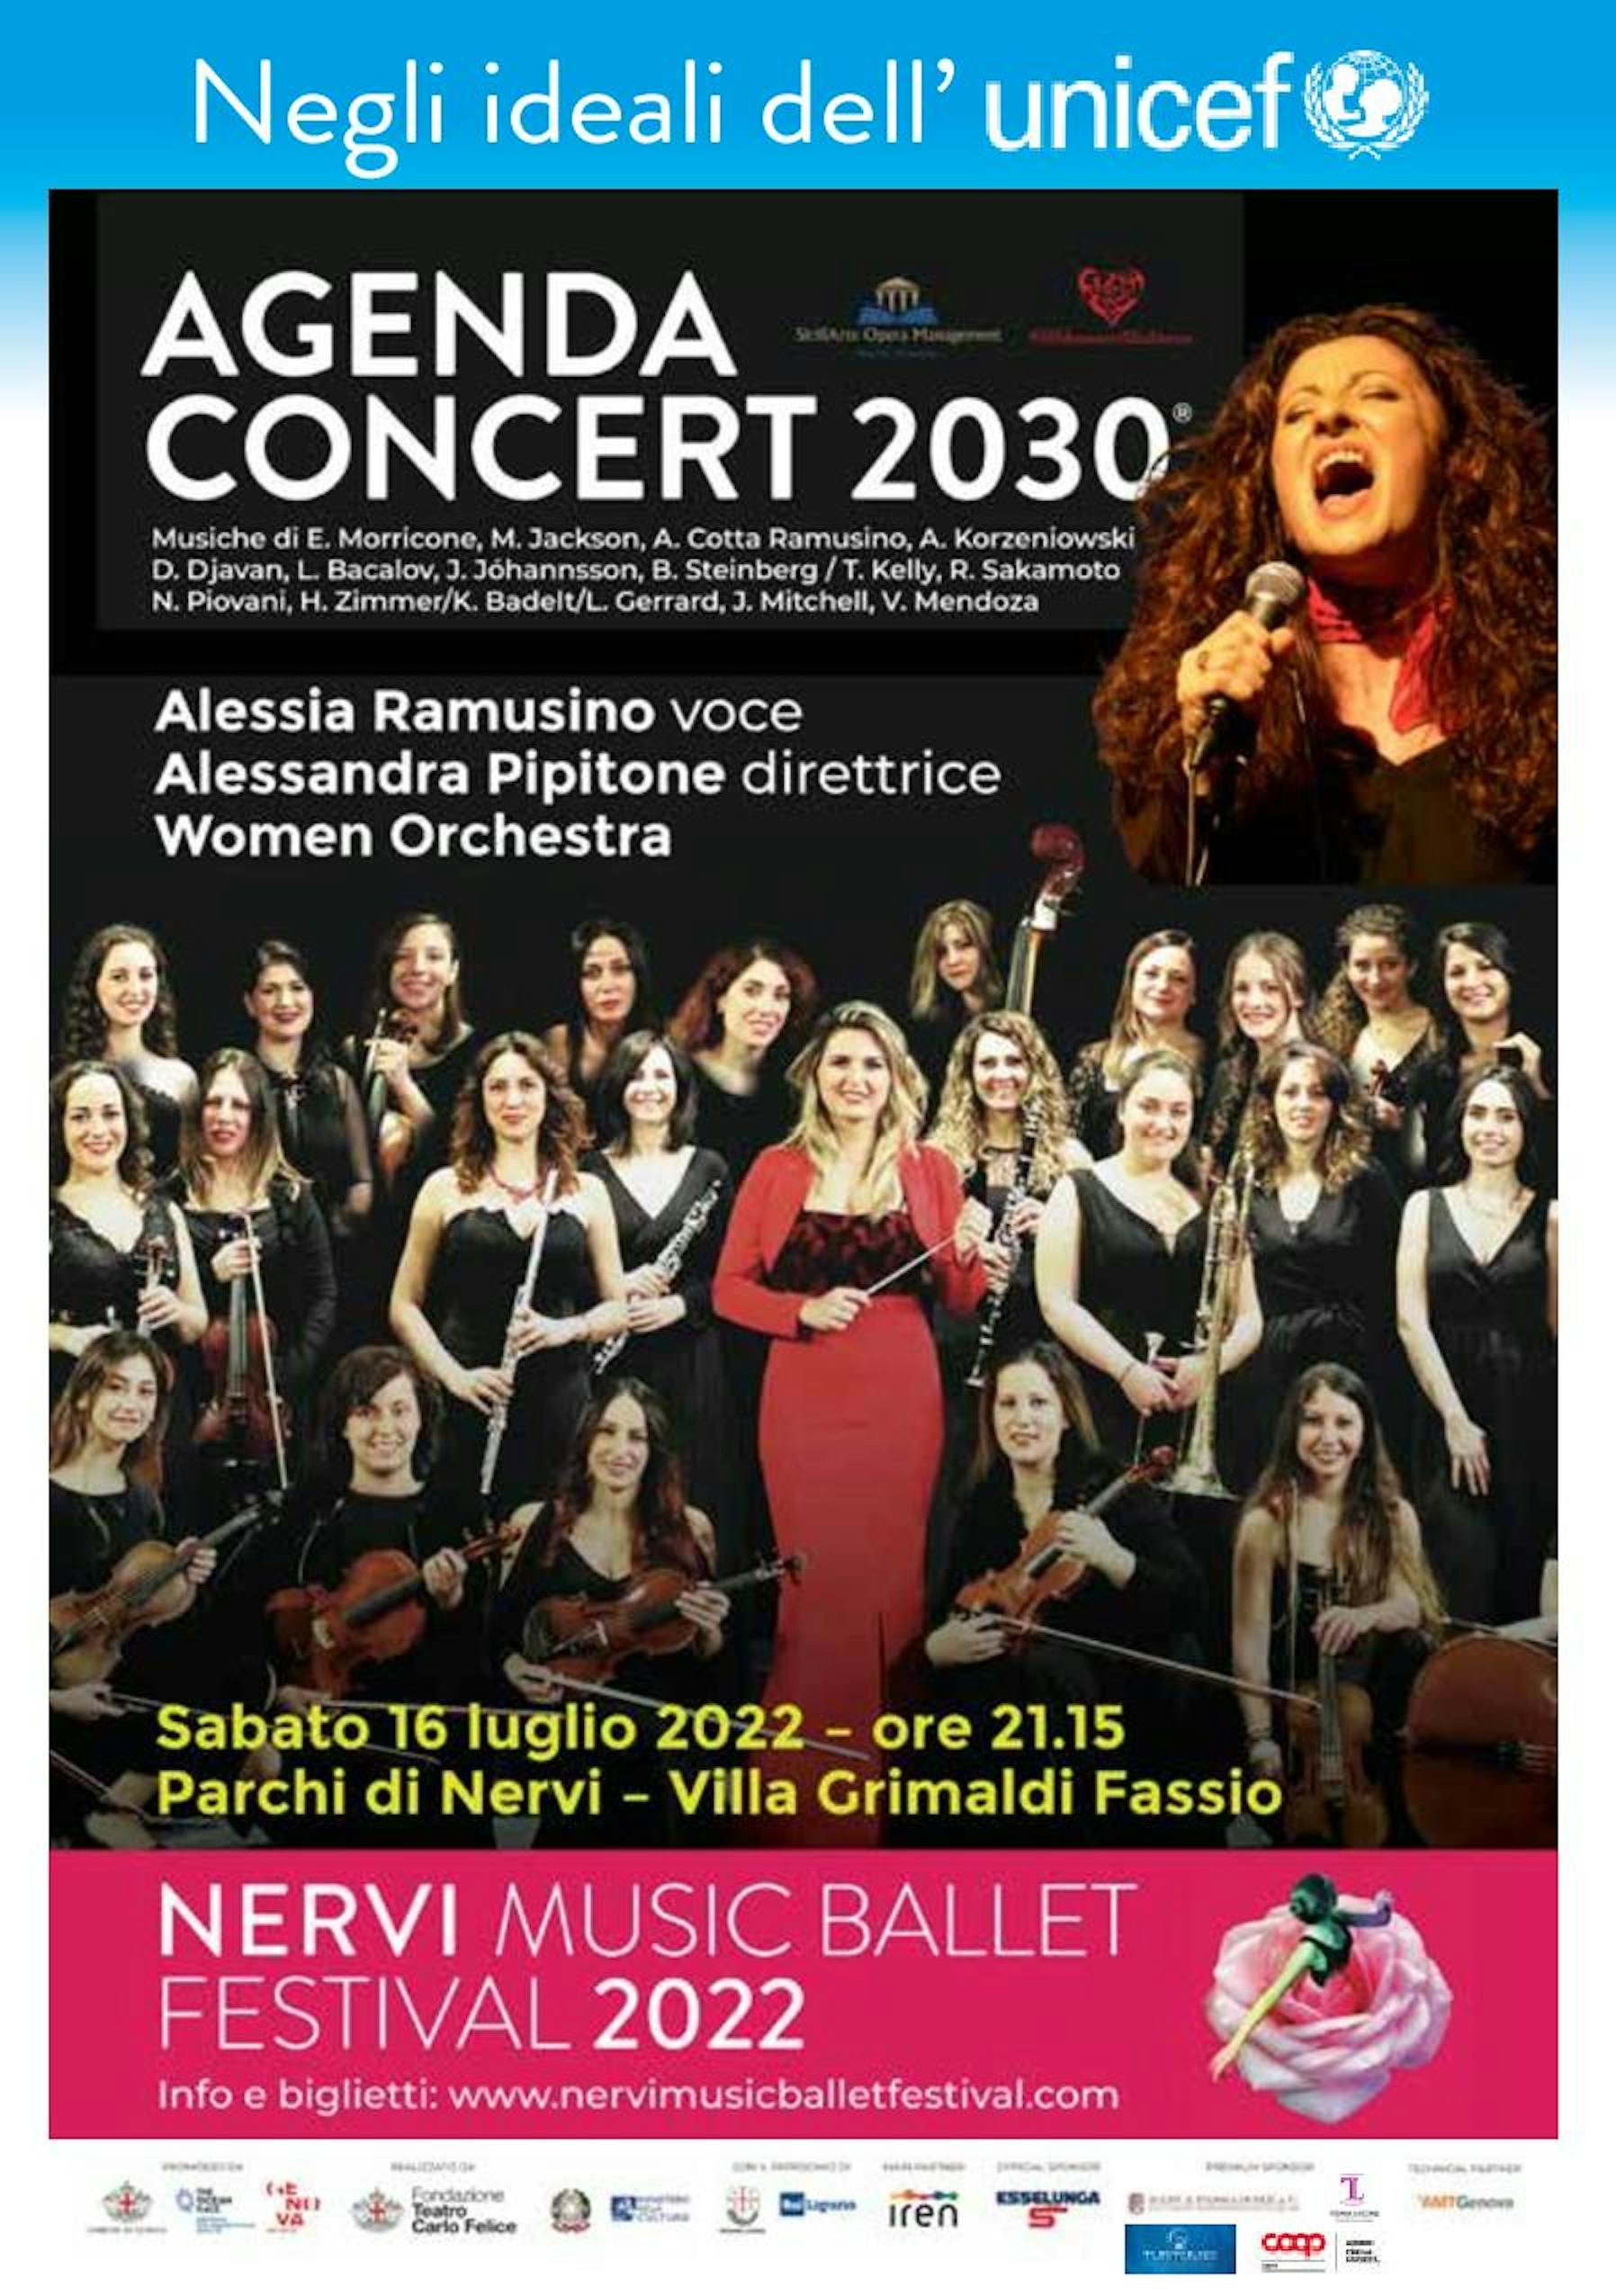 Agenda 2030 Concert